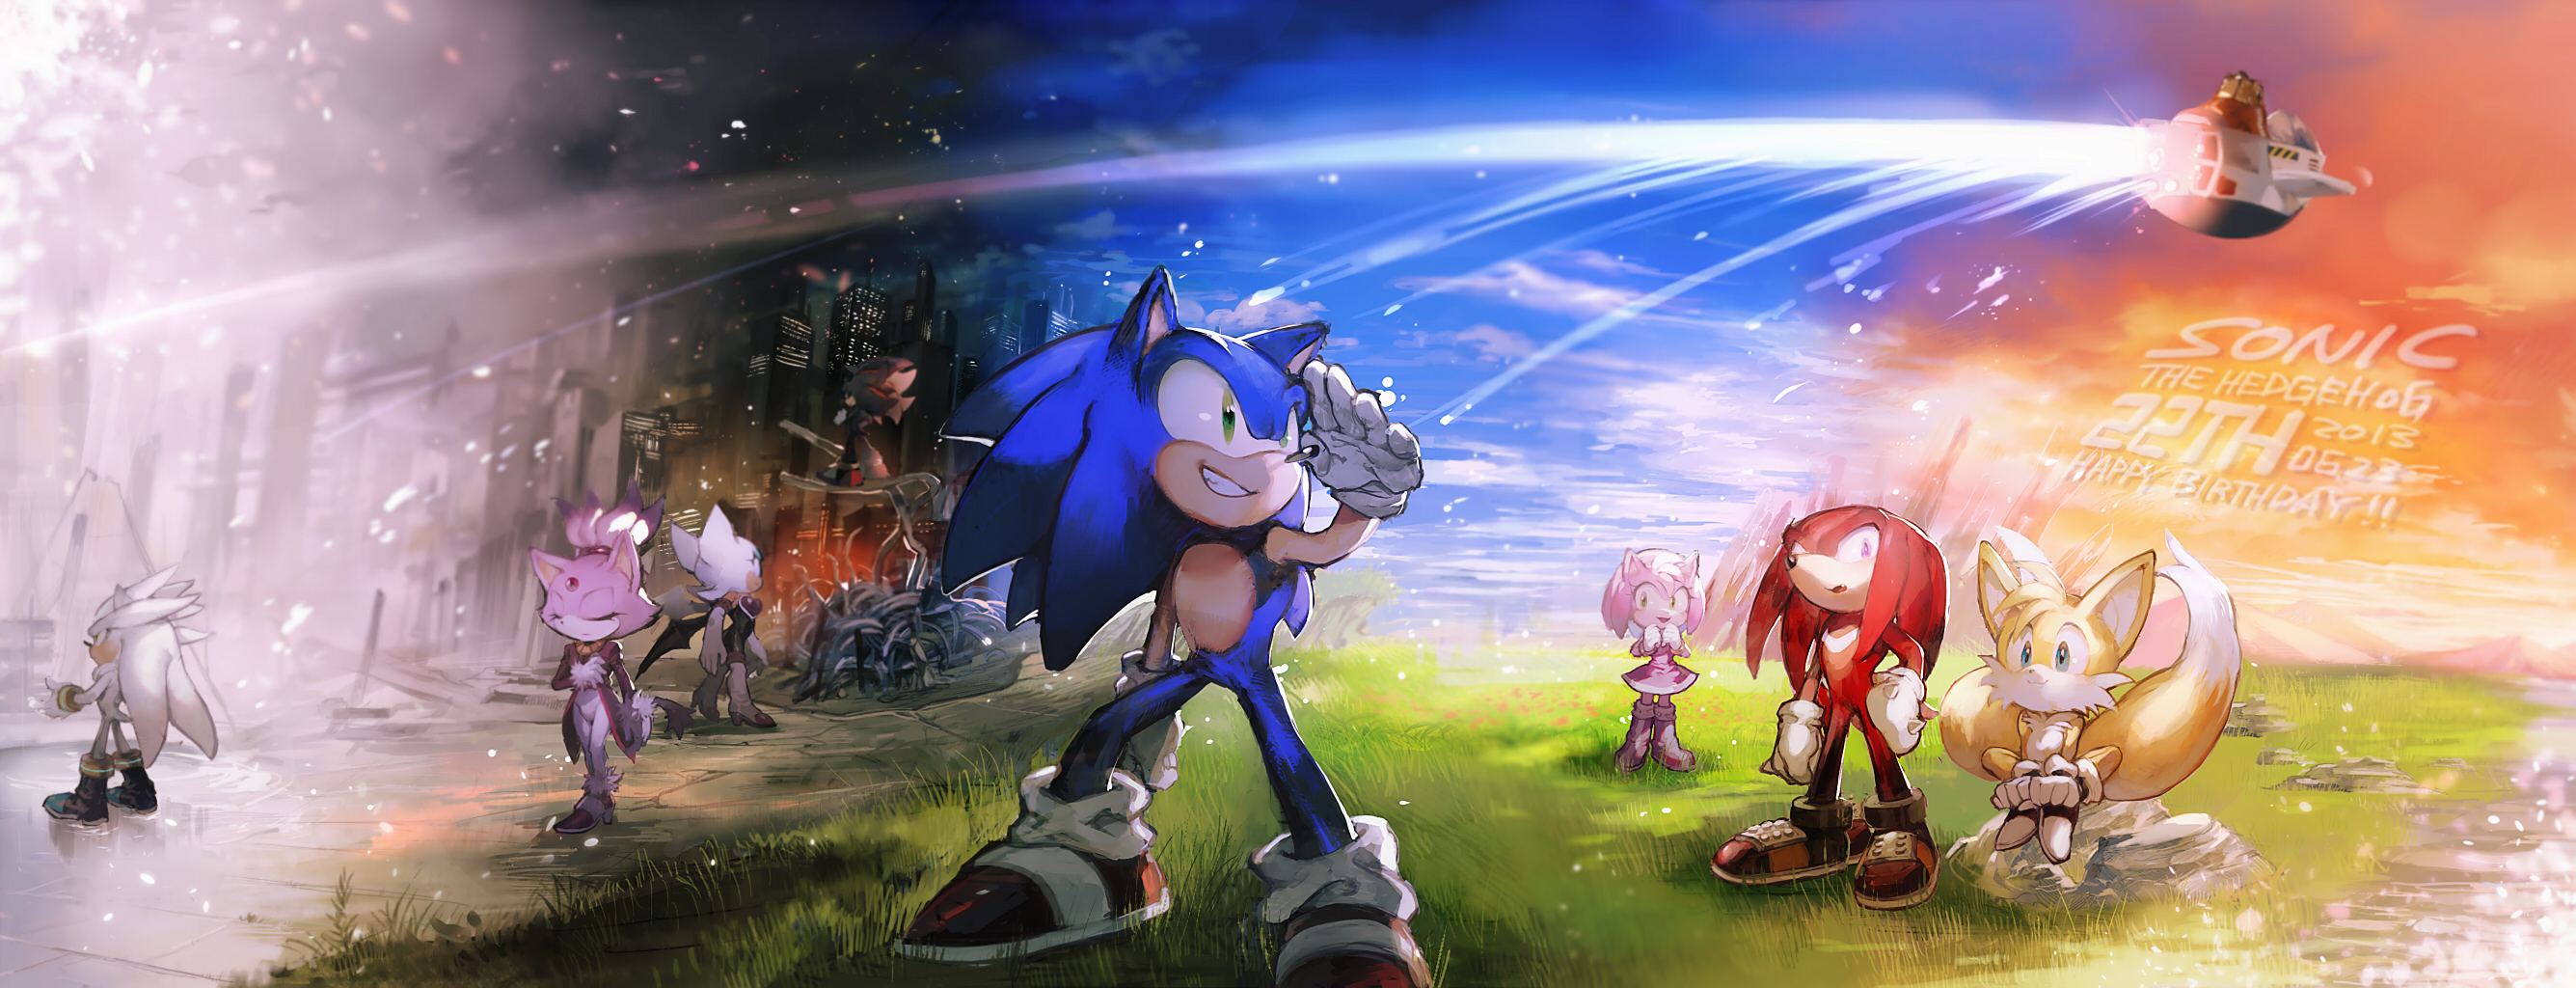 Sonic the Hedgehog Art by aoki6311